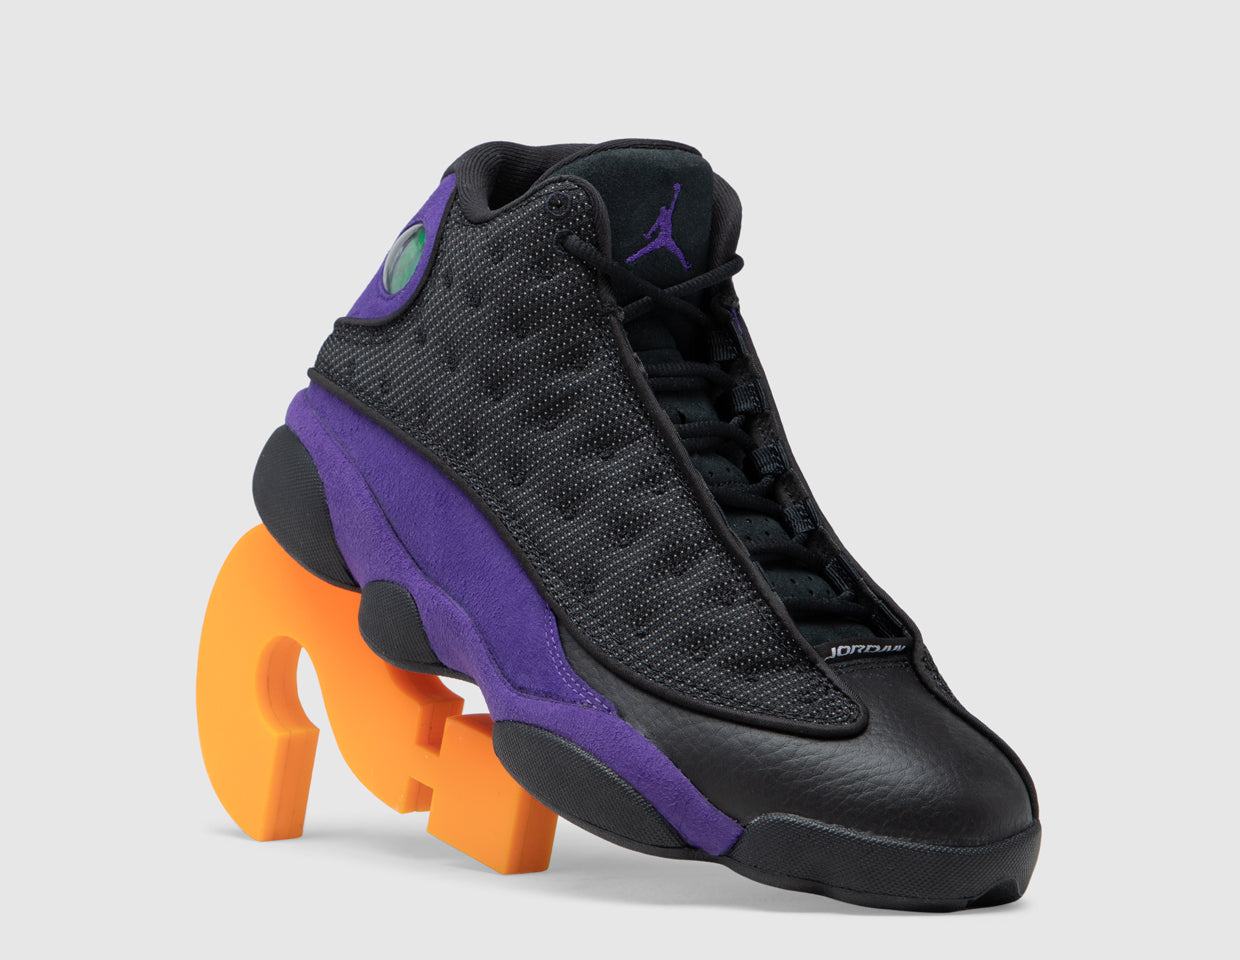 Jordan 13 Retro Black / Court Purple - White